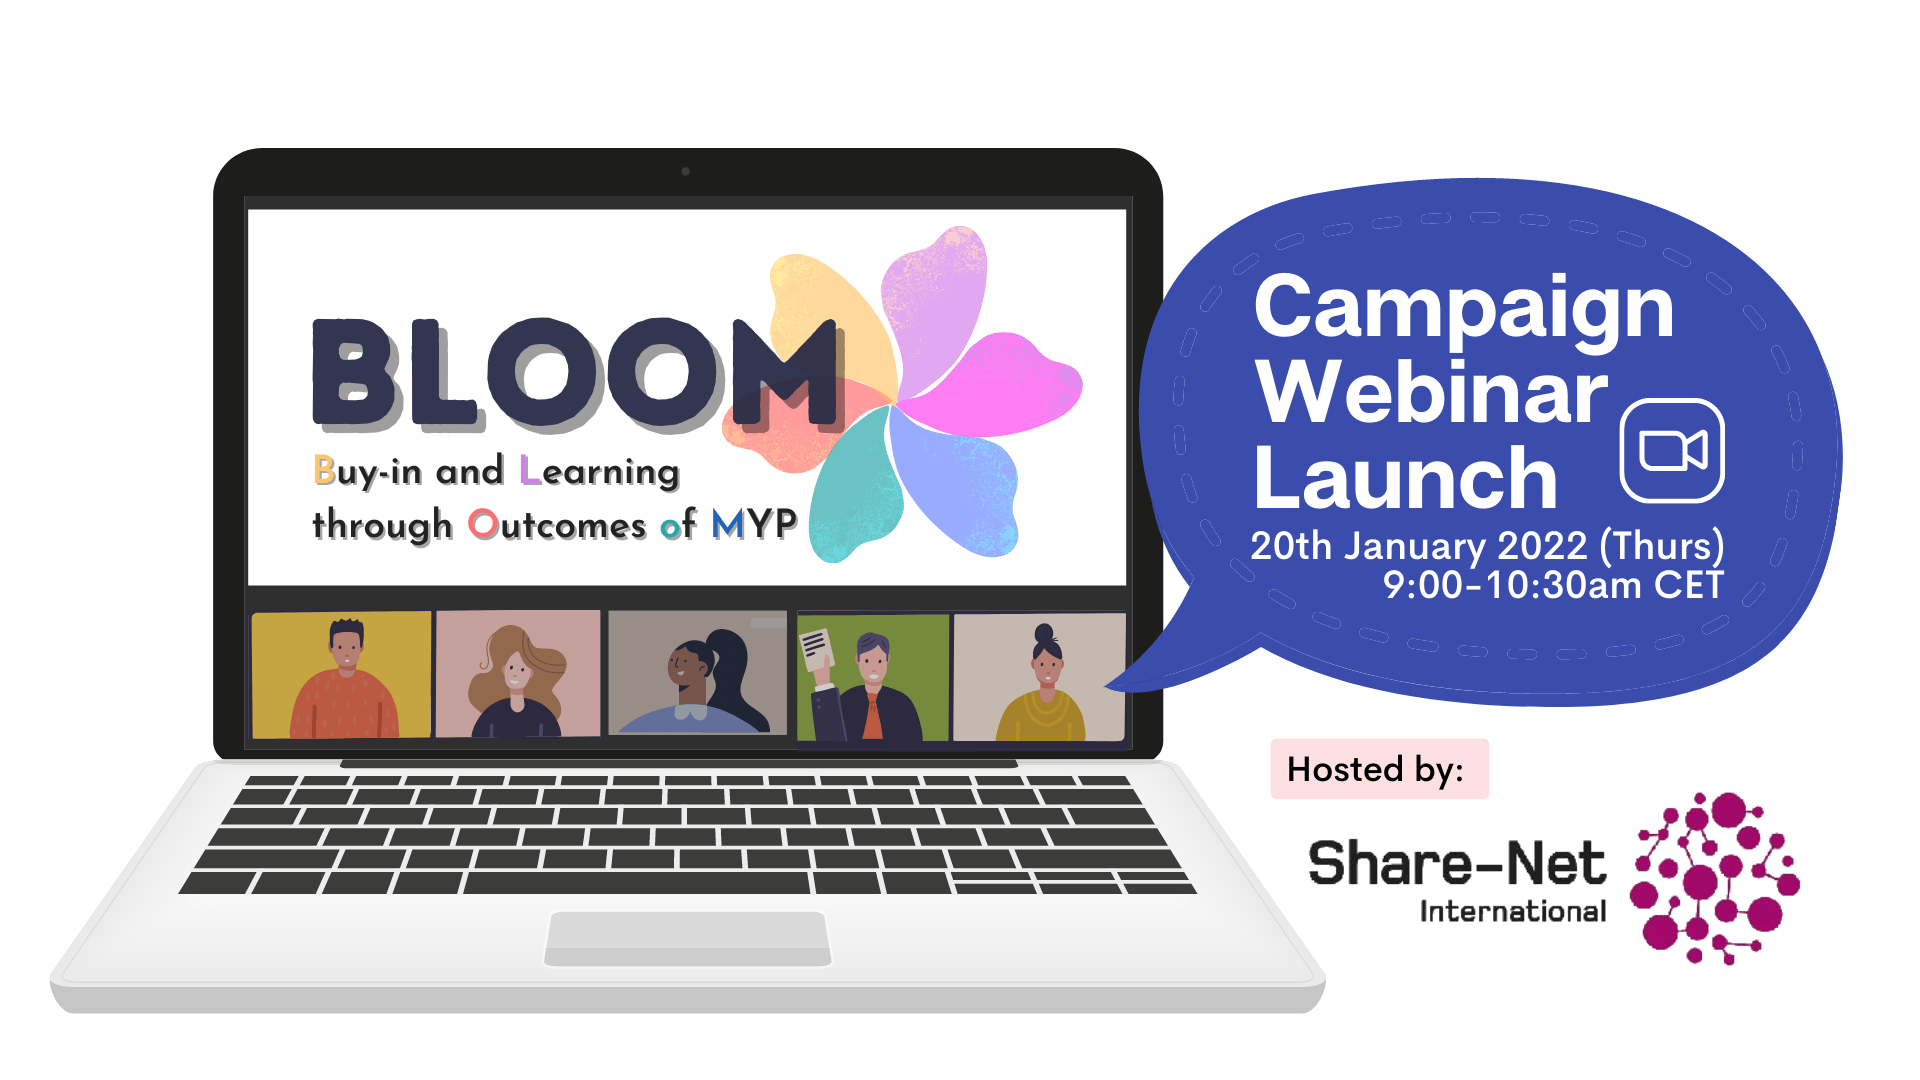 BLOOM Campaign Webinar Launch